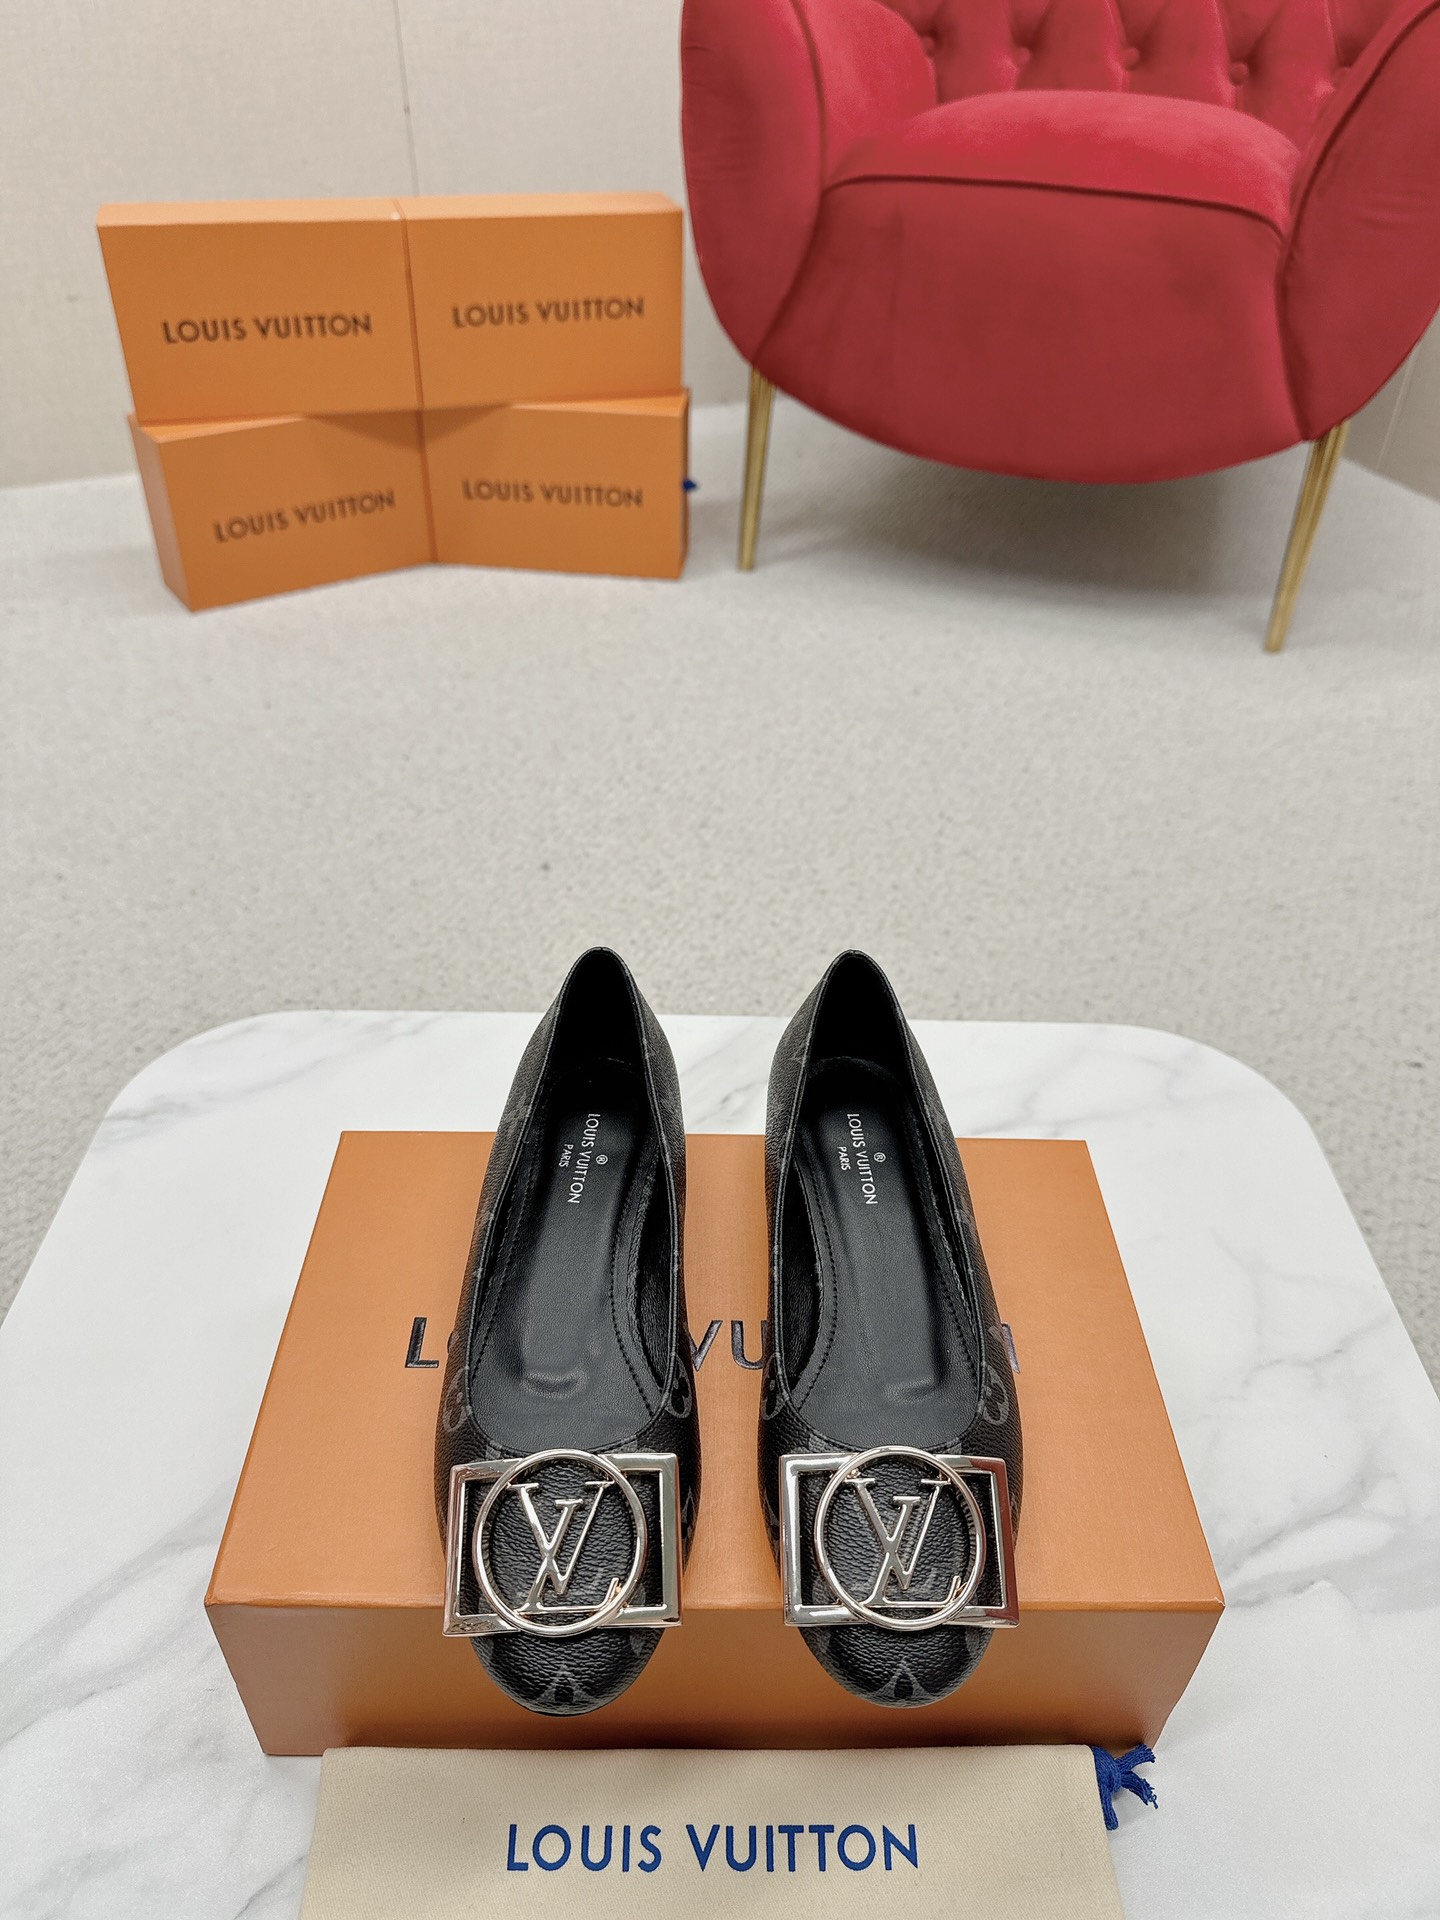 How quality Louis Vuitton High Heel Pumps Single Layer Shoes Silver Calfskin Cowhide Genuine Leather Sheepskin Fashion